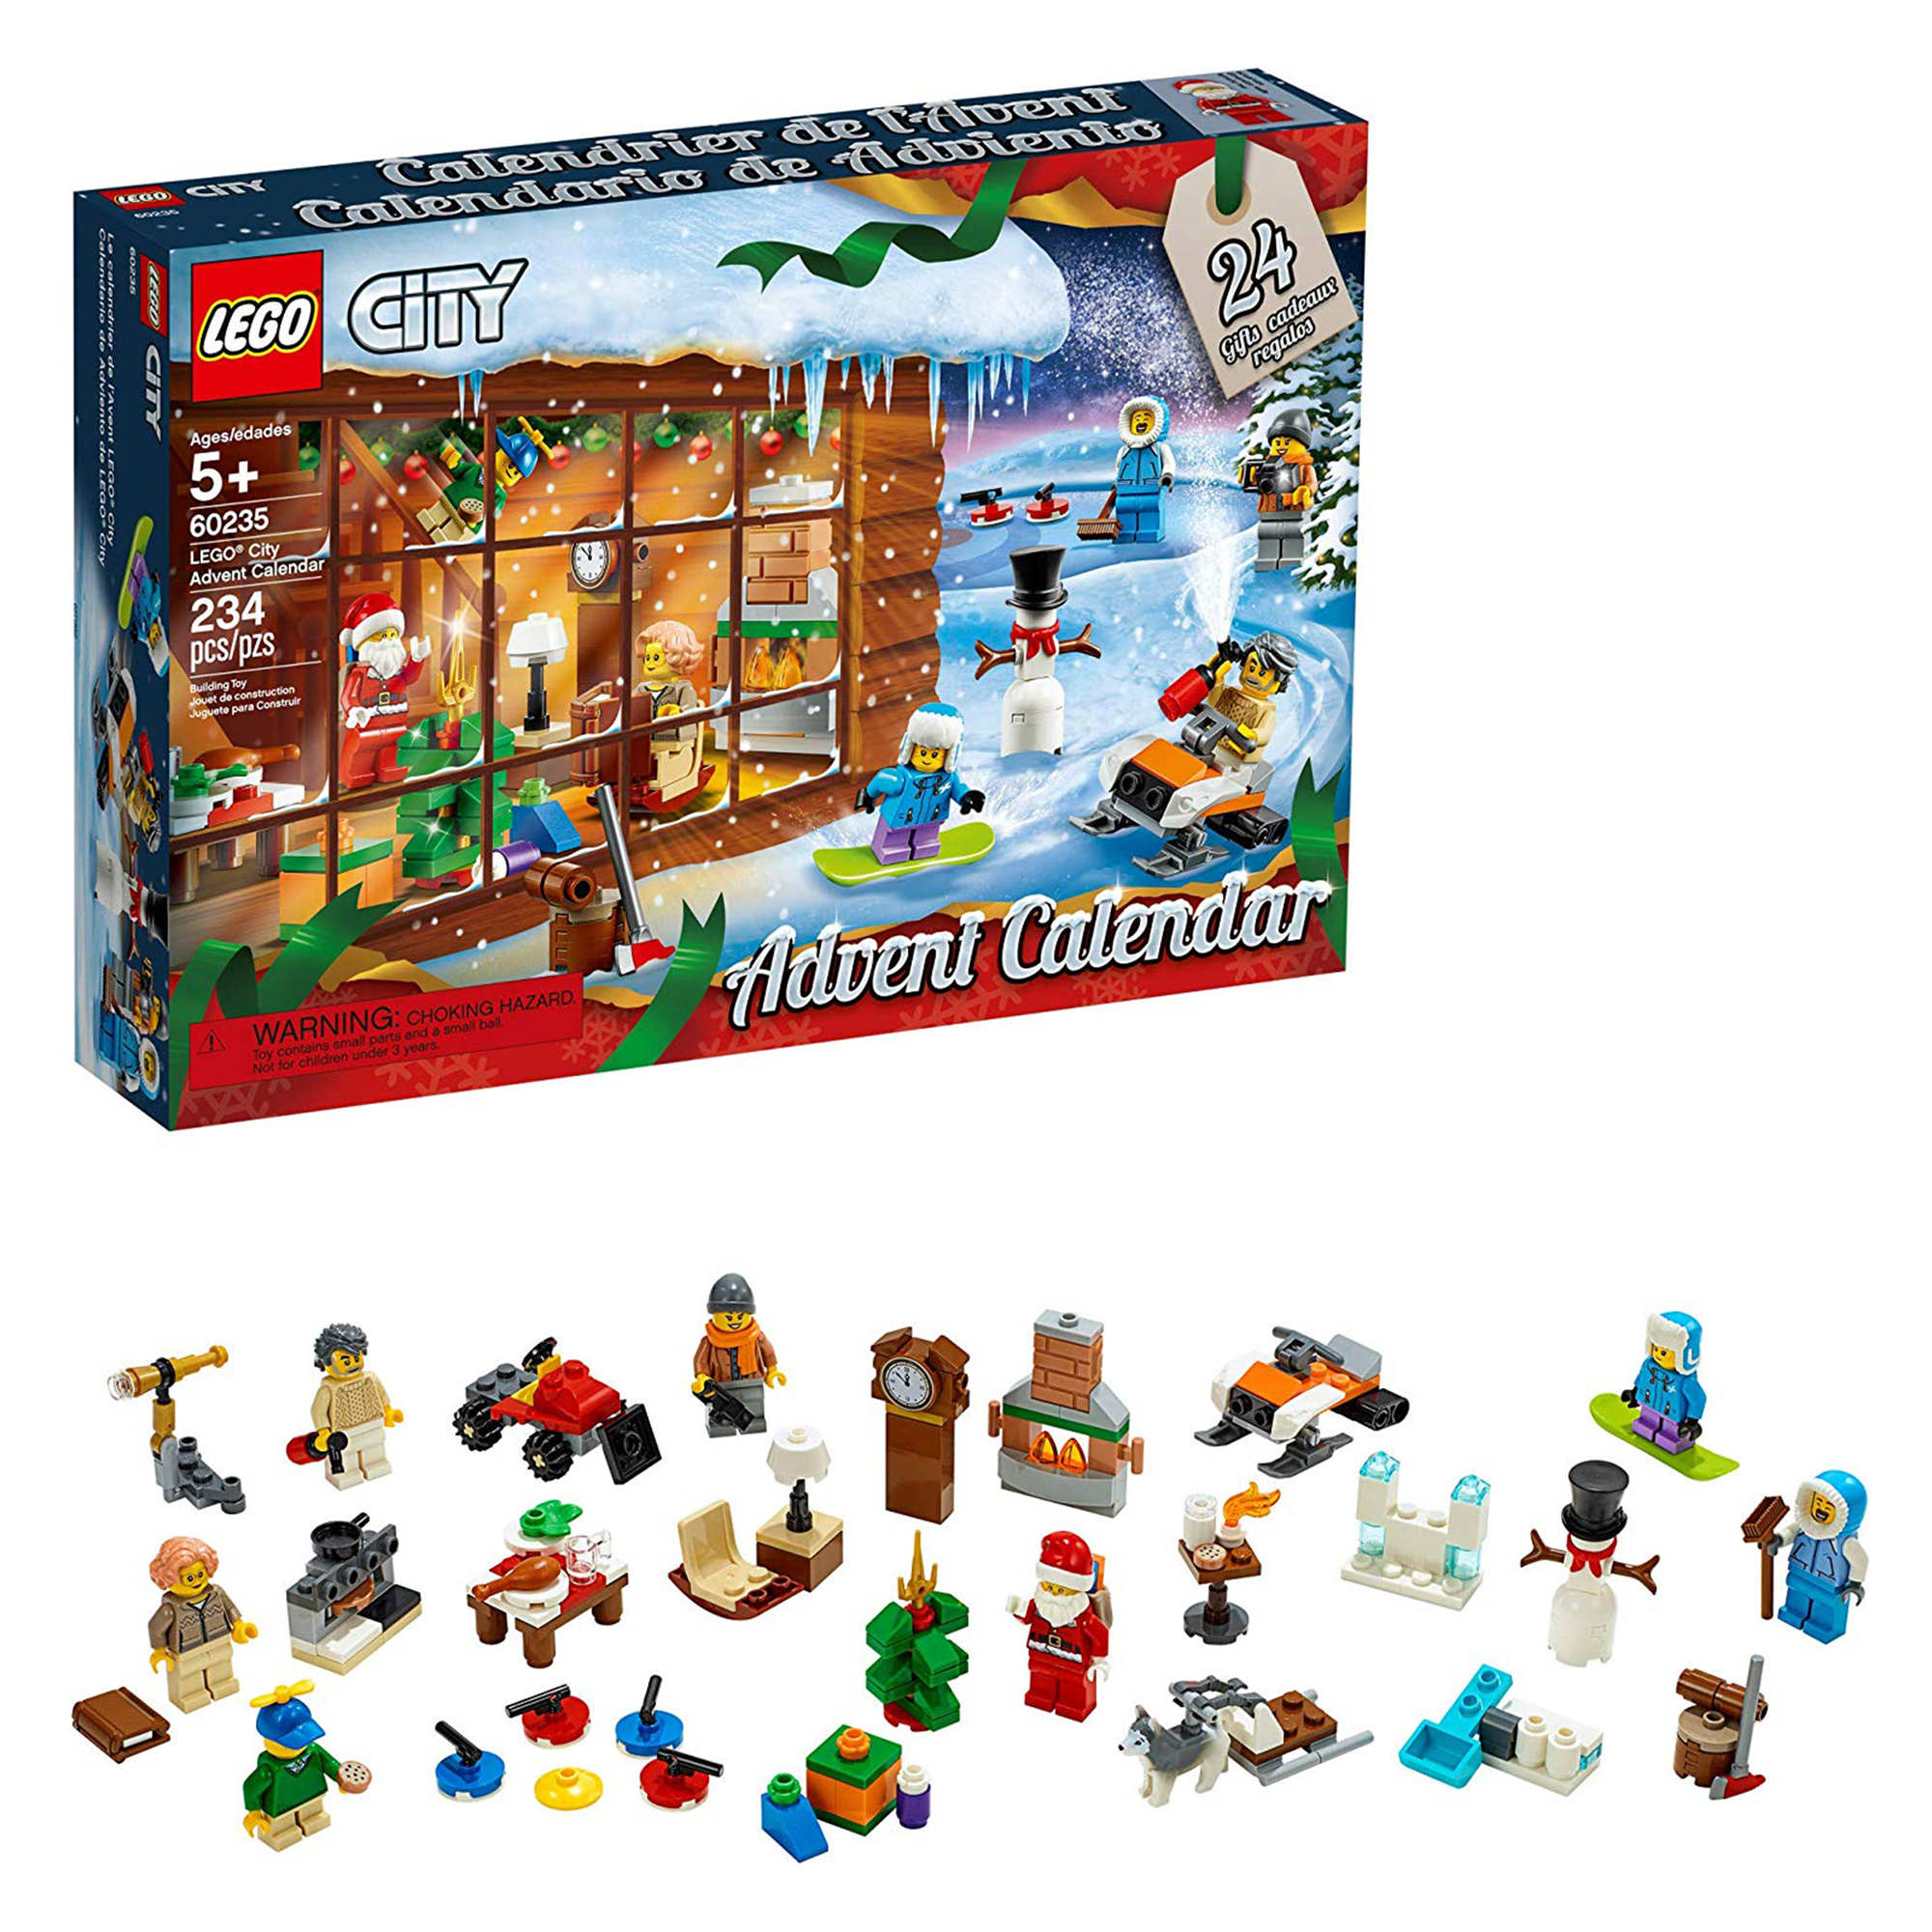 Lego 60235 City Advent Calendar Building Kit, New 2019 (234 Pieces) - image 1 of 3